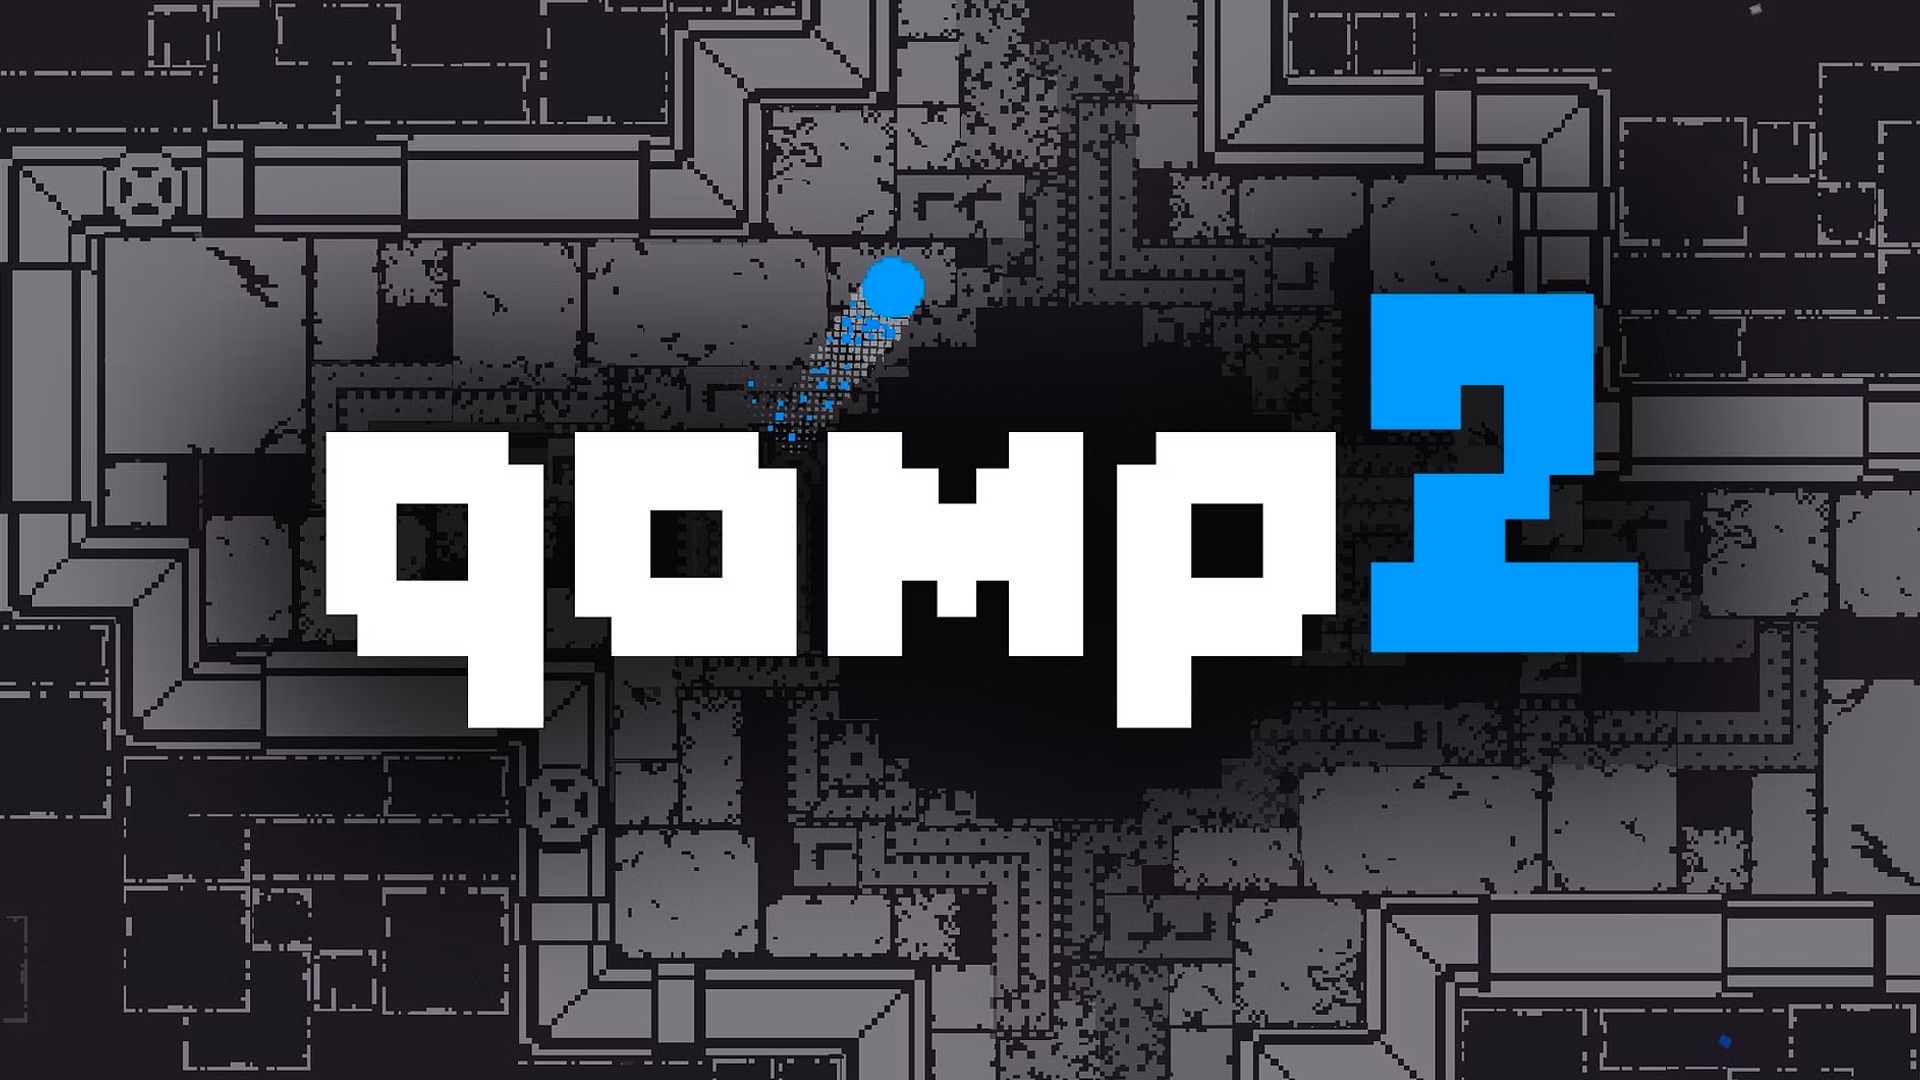 qomp2 PS4 Version Full Game Setup Free Download